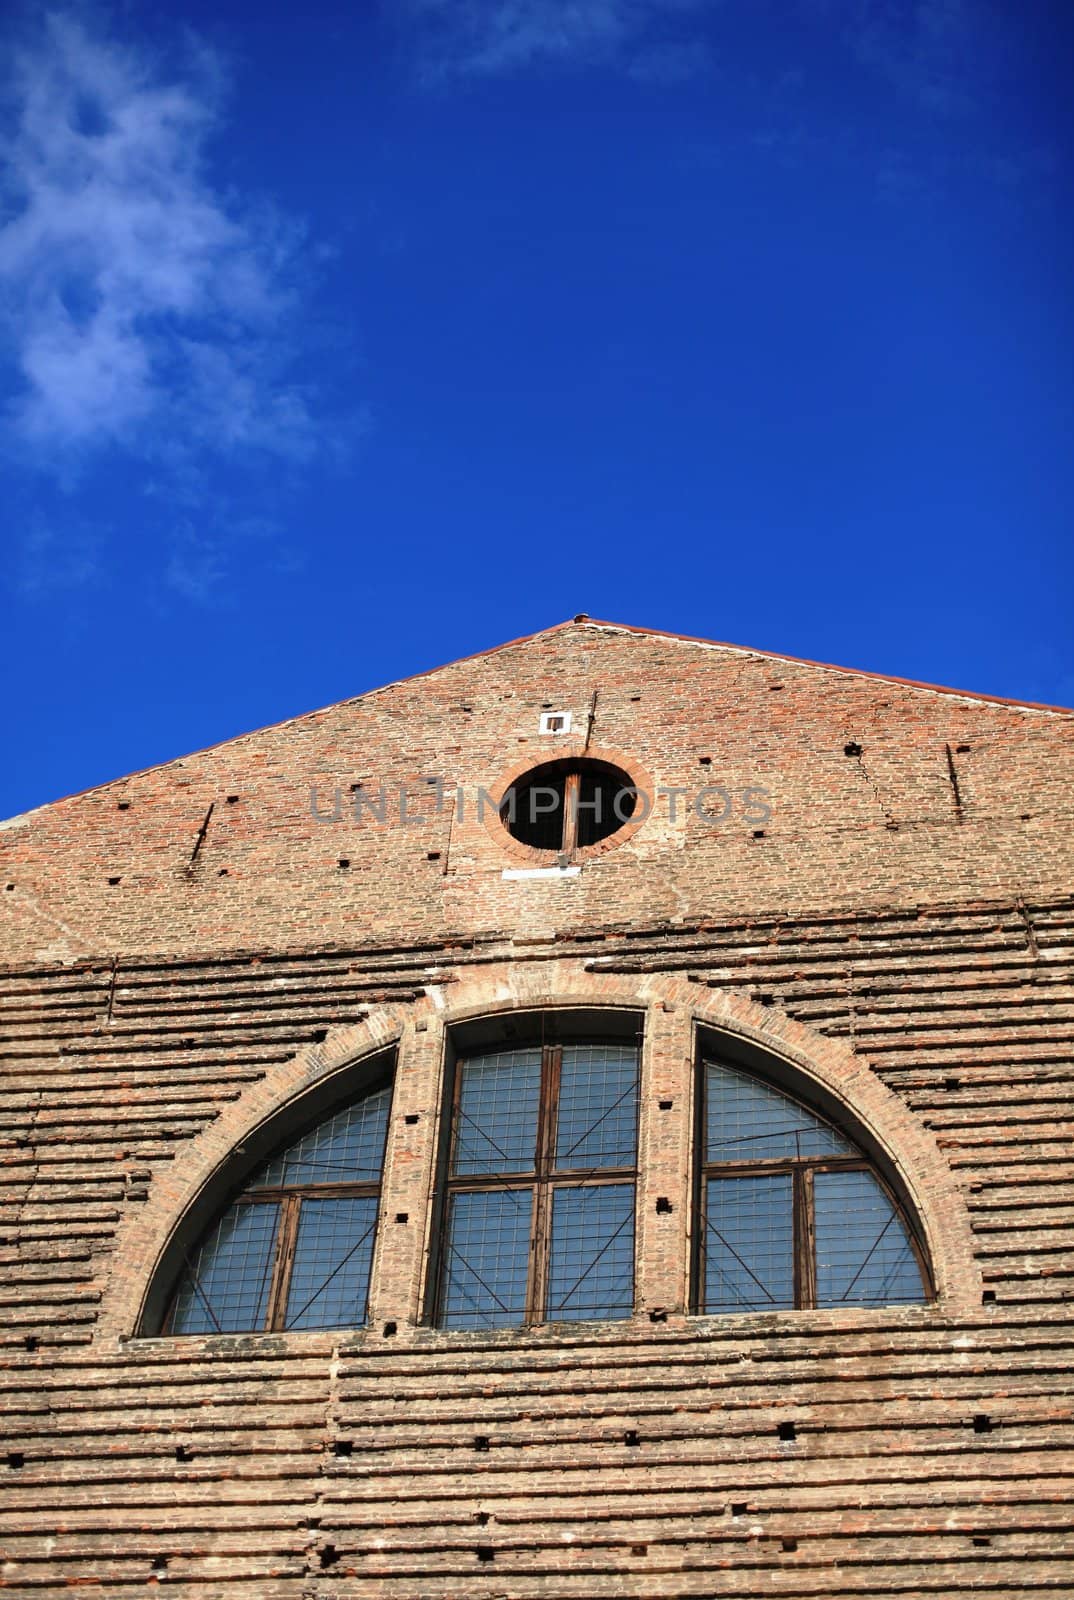 Church facade on blue background, Venice